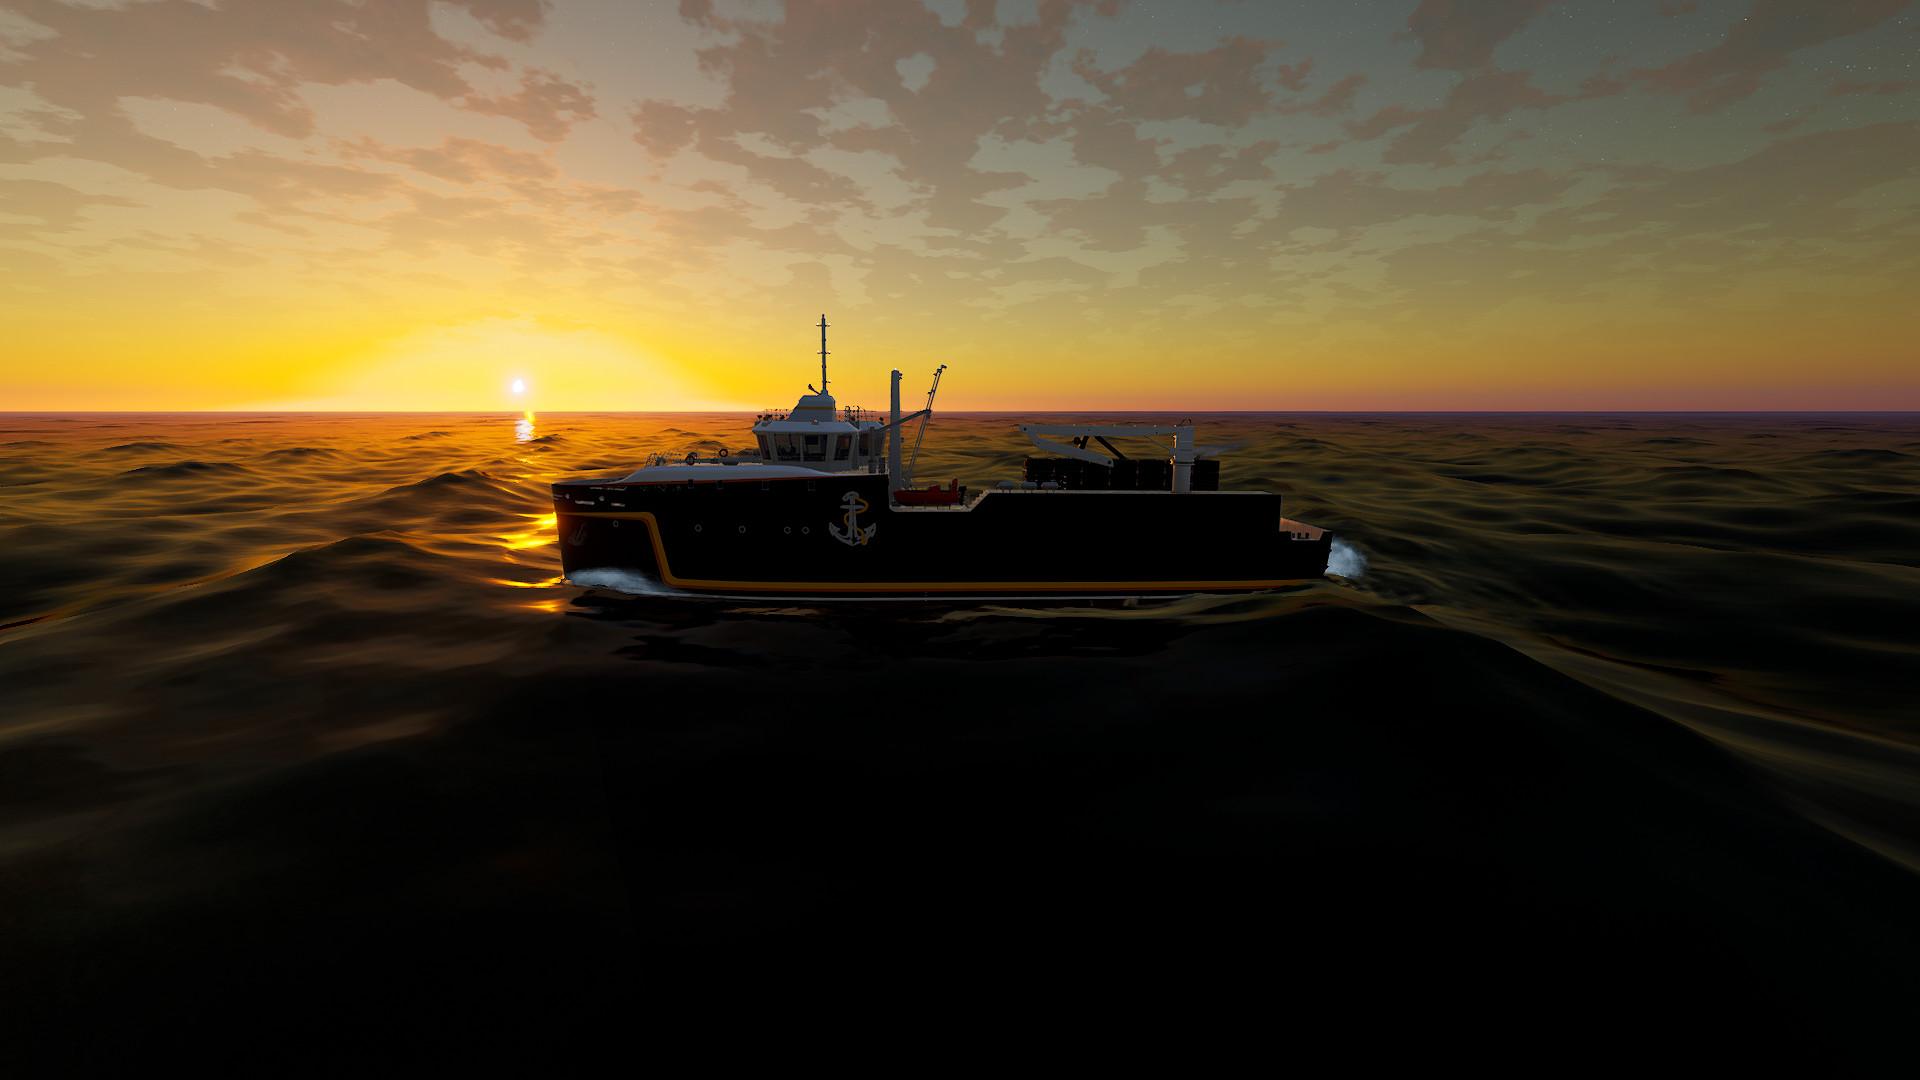 Screenshot №12 from game Fishing: North Atlantic - Enhanced Edition